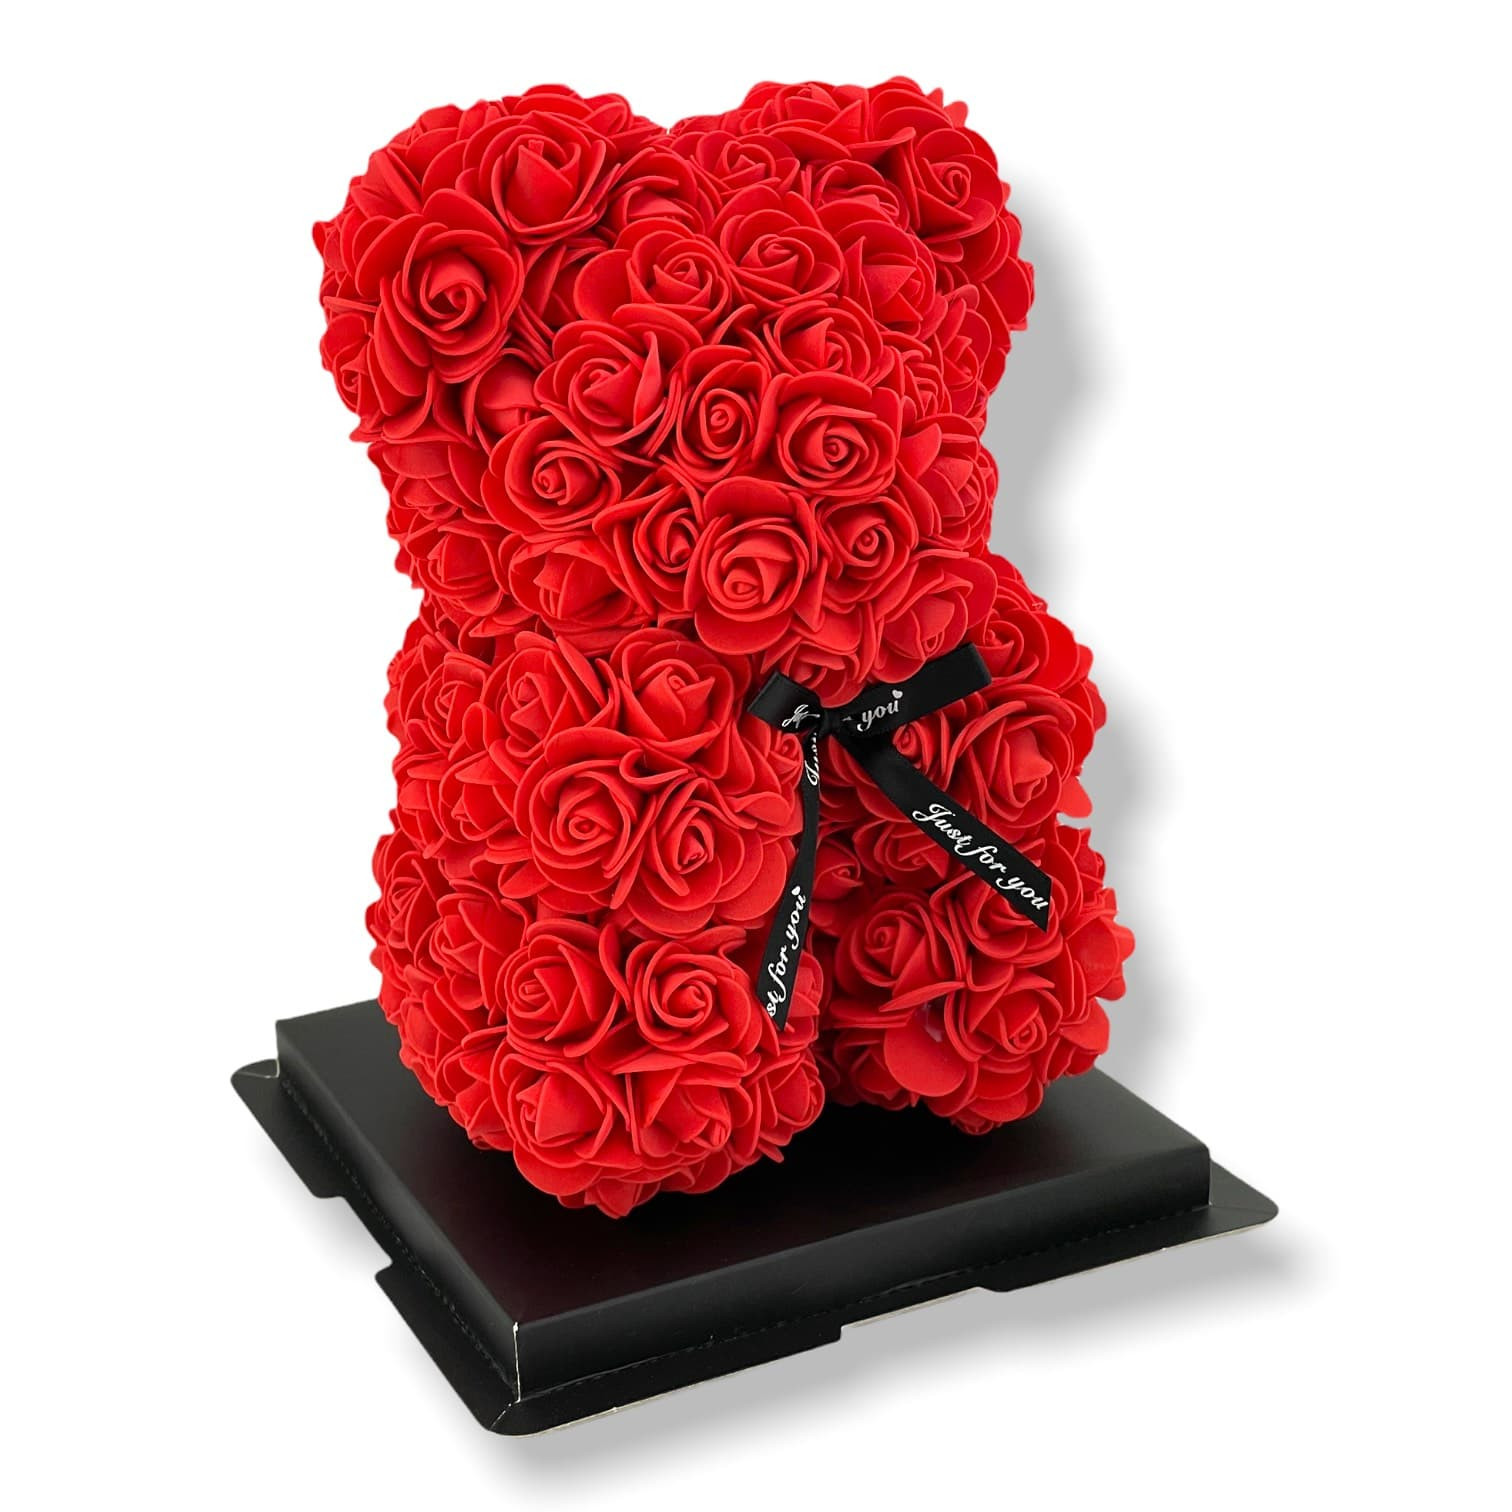 Orsetto di Rose Rosse - 25 cm  Negozio di fiori online Rose du